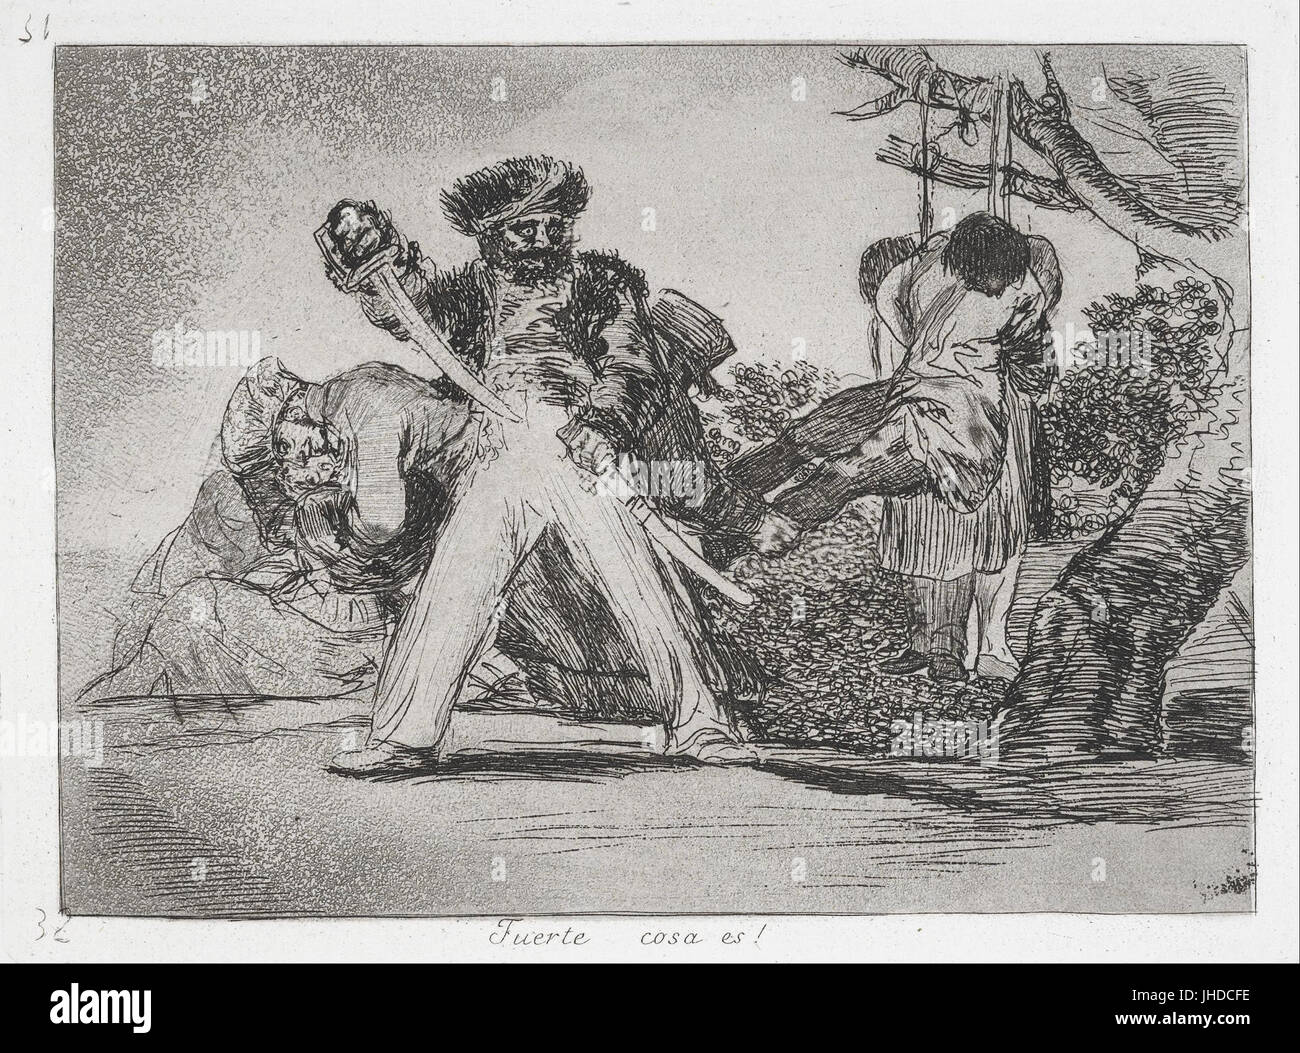 Francisco de Goya - This is too much! (Fuerte cosa es!) from the series The Disasters of War (Los Desastres de la Guerra... - Stock Photo